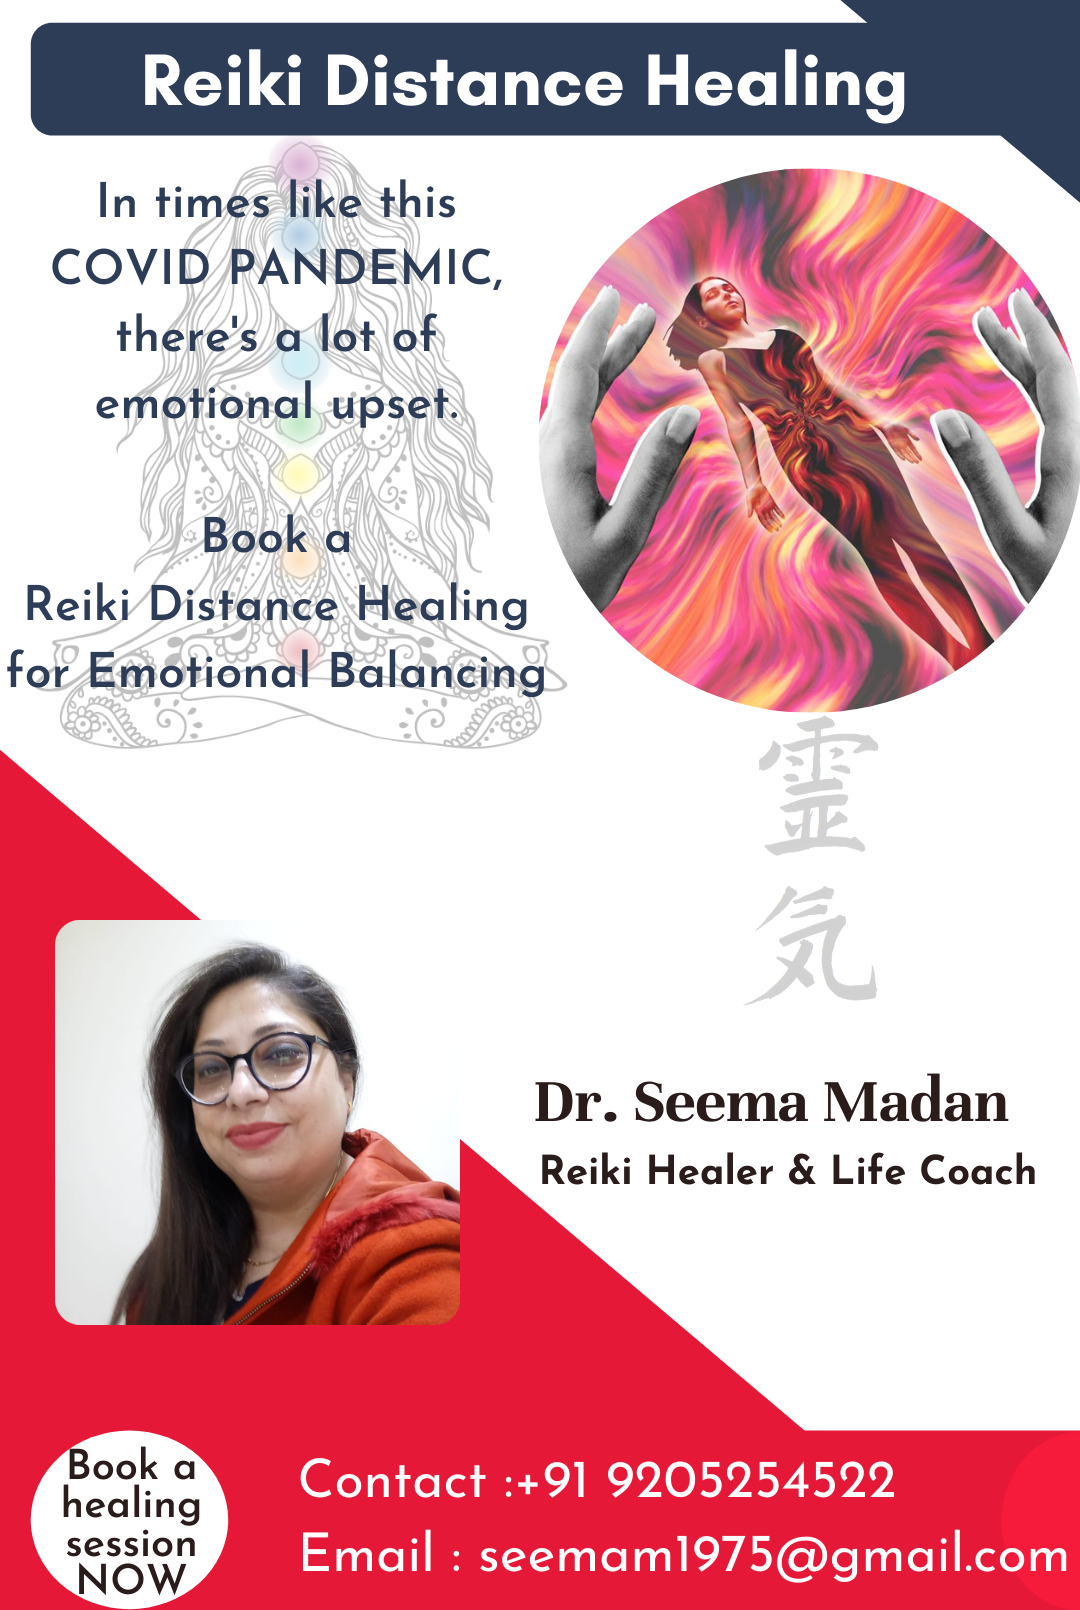 Reiki Energy Healing by Dr. Seema Madan - Chennai